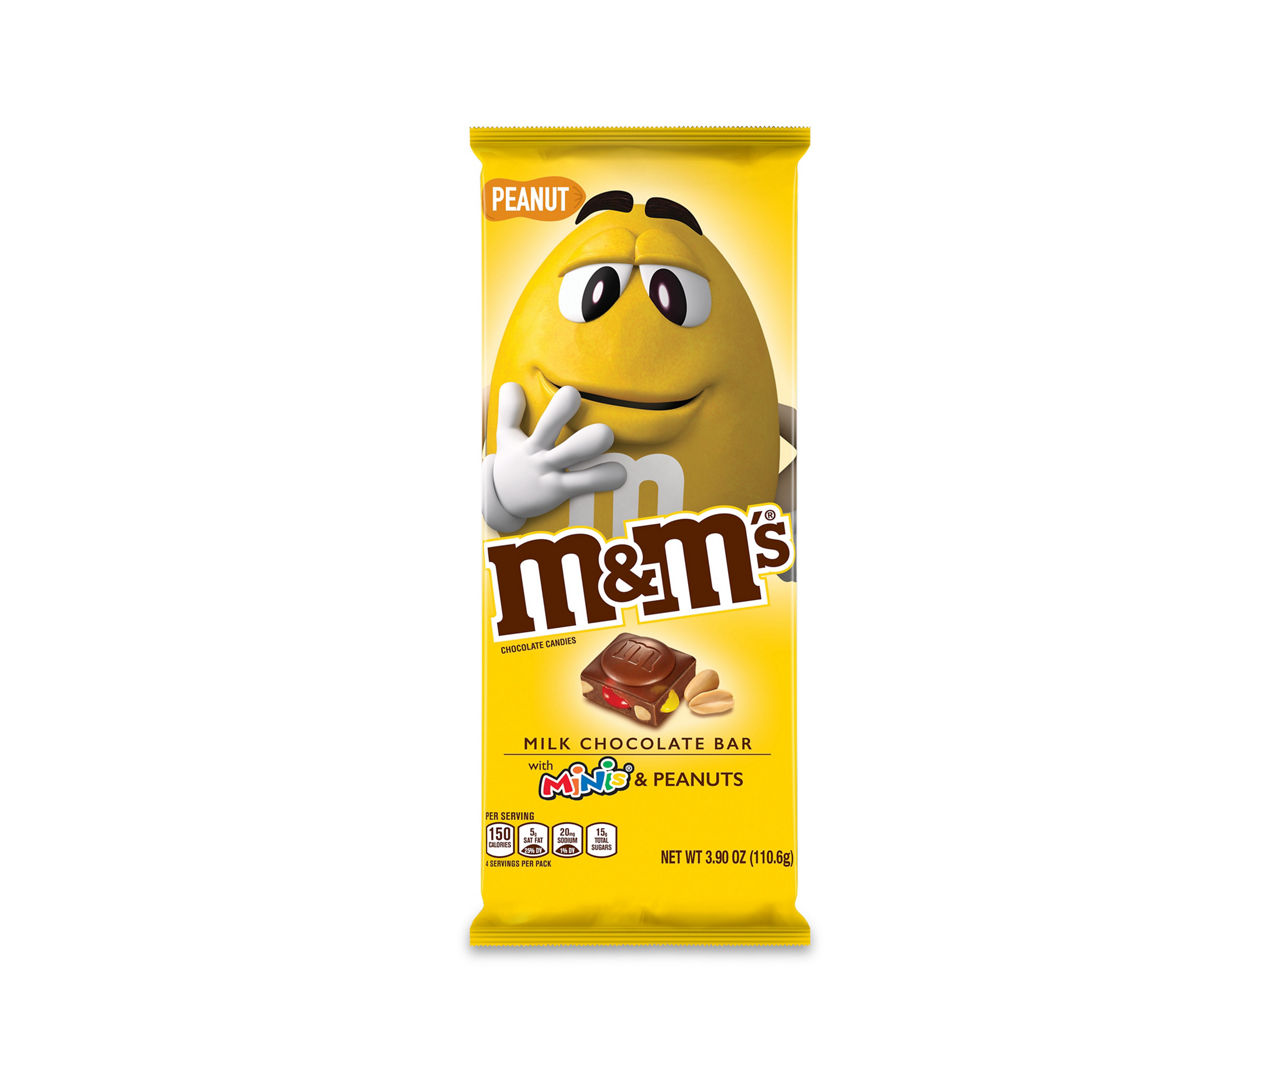 M&M's M&M'S MINIS & Peanut Chocolate Candy Bars, 4 oz